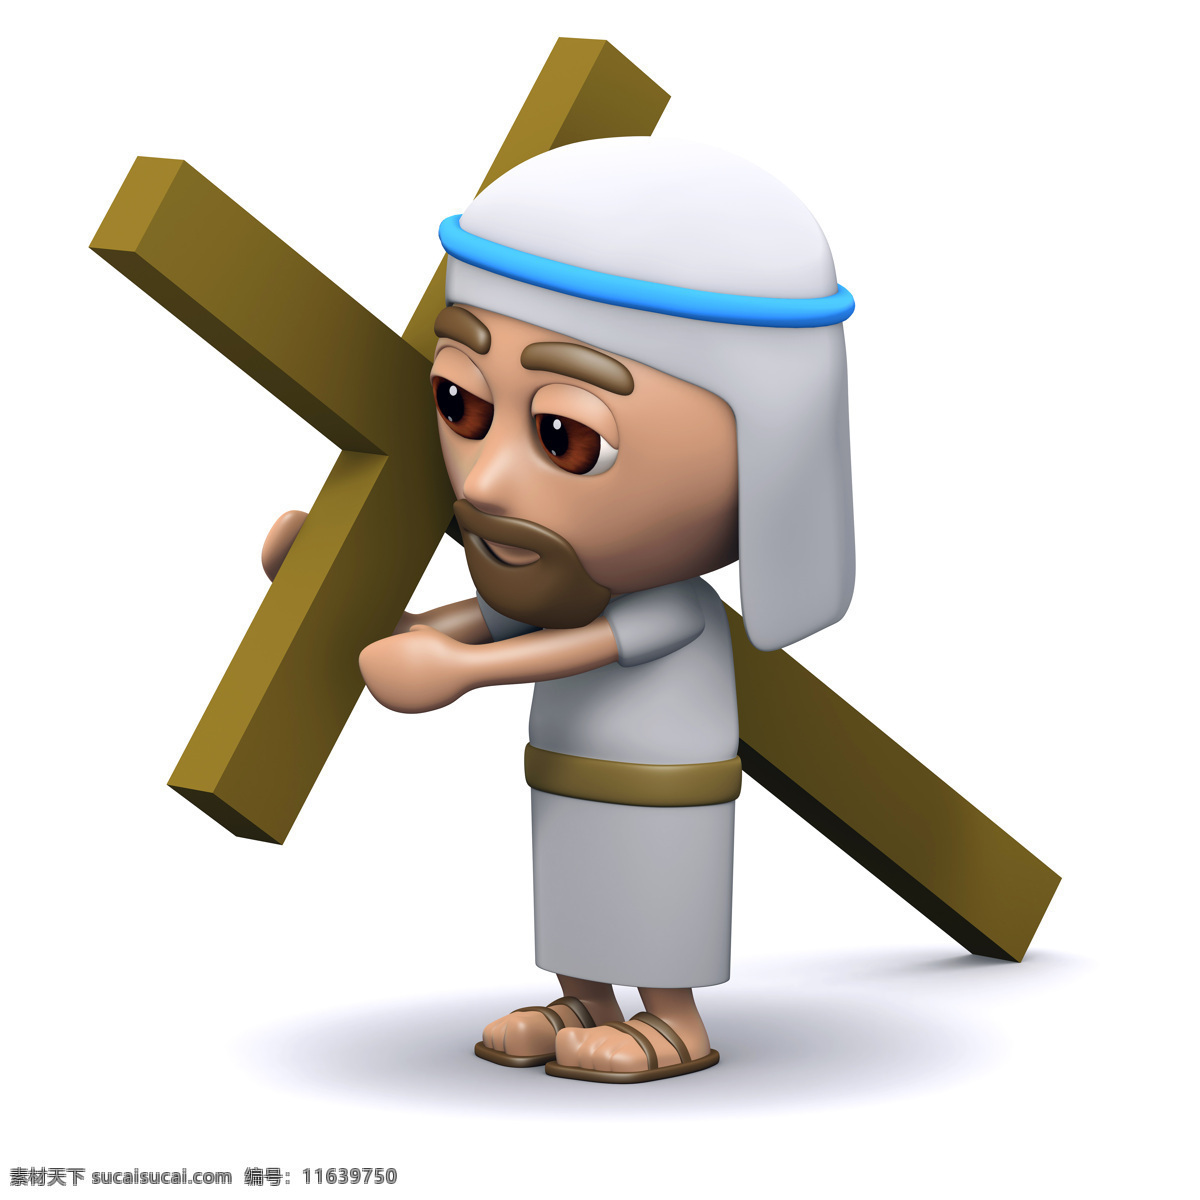 3d 动漫 耶稣 背 十字架 3d耶稣主题 动画 动漫人物 卡通人物 剧中情节 其他人物 人物图片